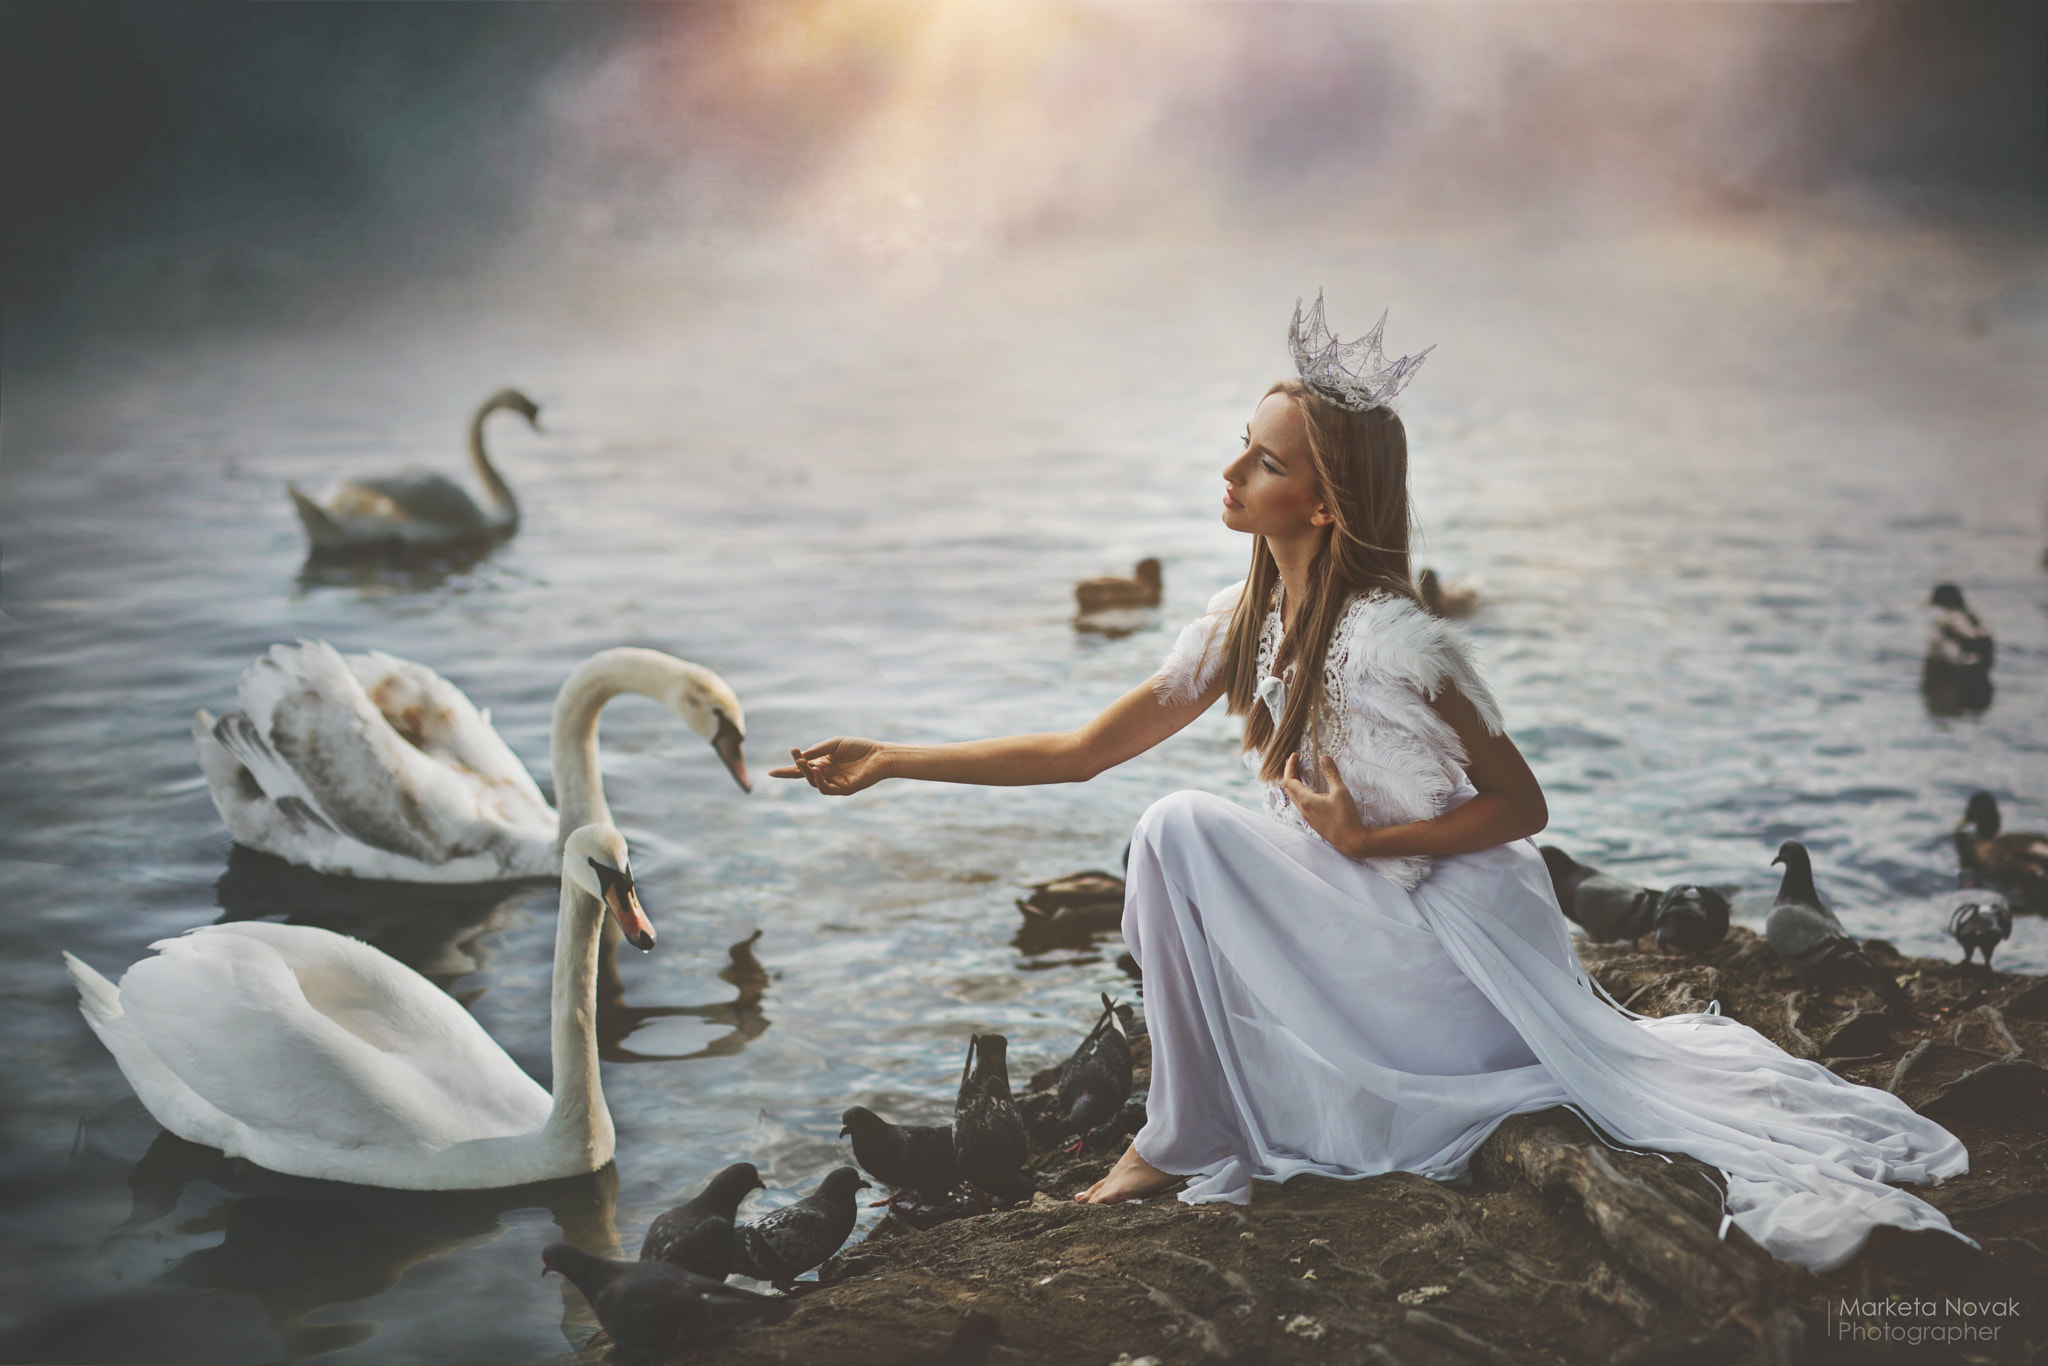 Marketa Novak Model Fantasy Girl Crown Women Swan Animals 2048x1366